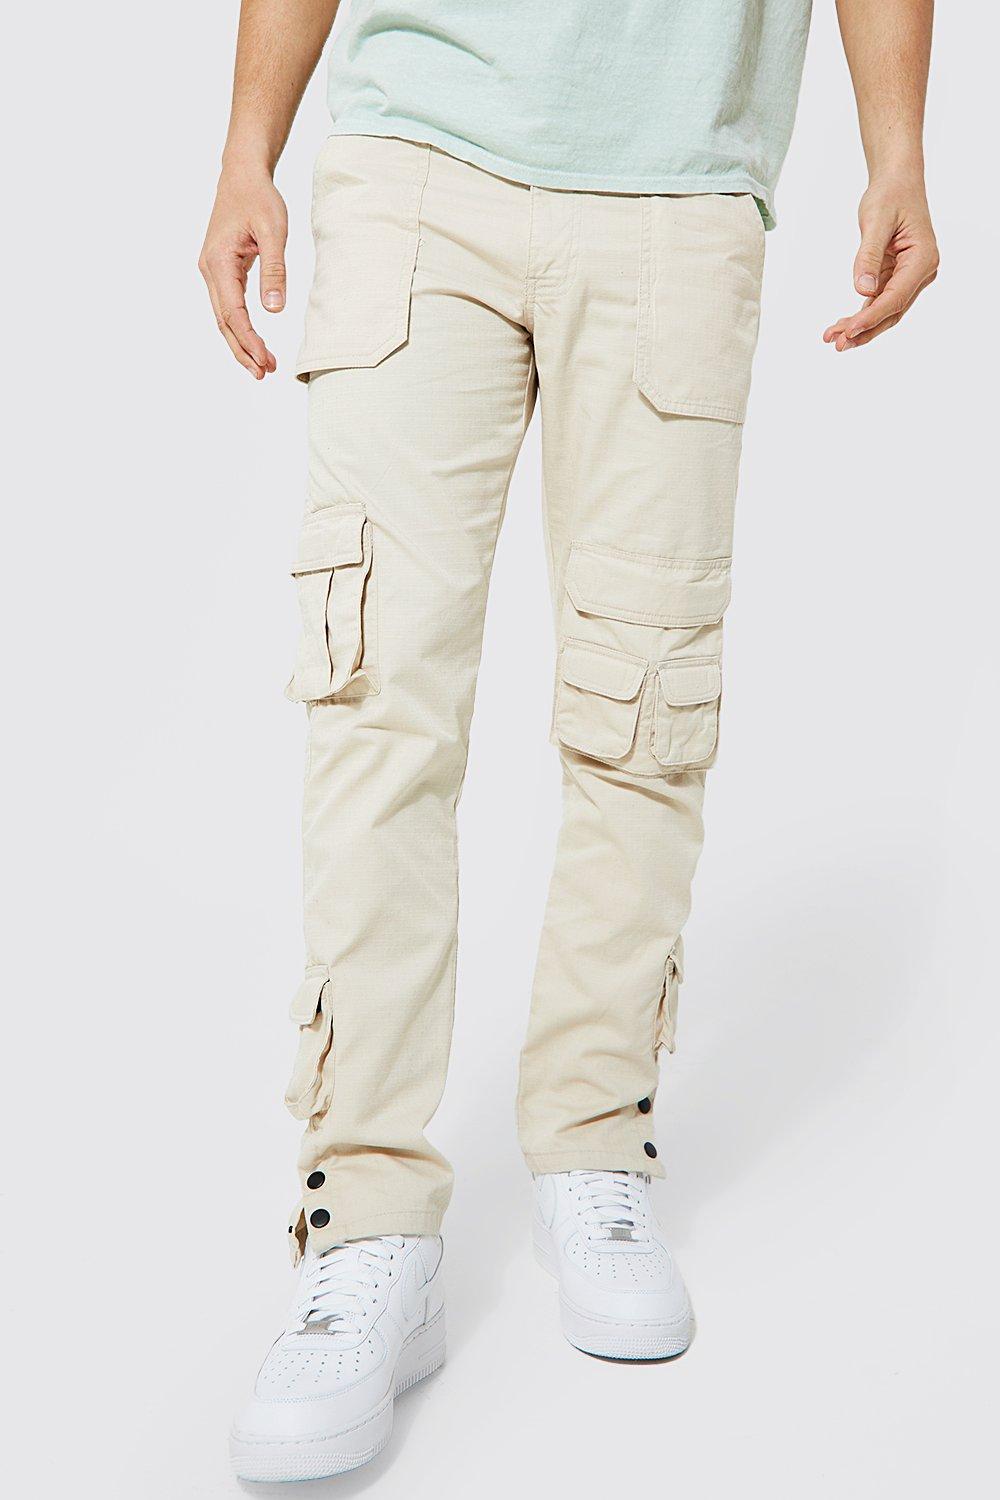 YYG Men Stylish Straight Leg Zipper Outdoor Multi Pockets Cargo Shorts